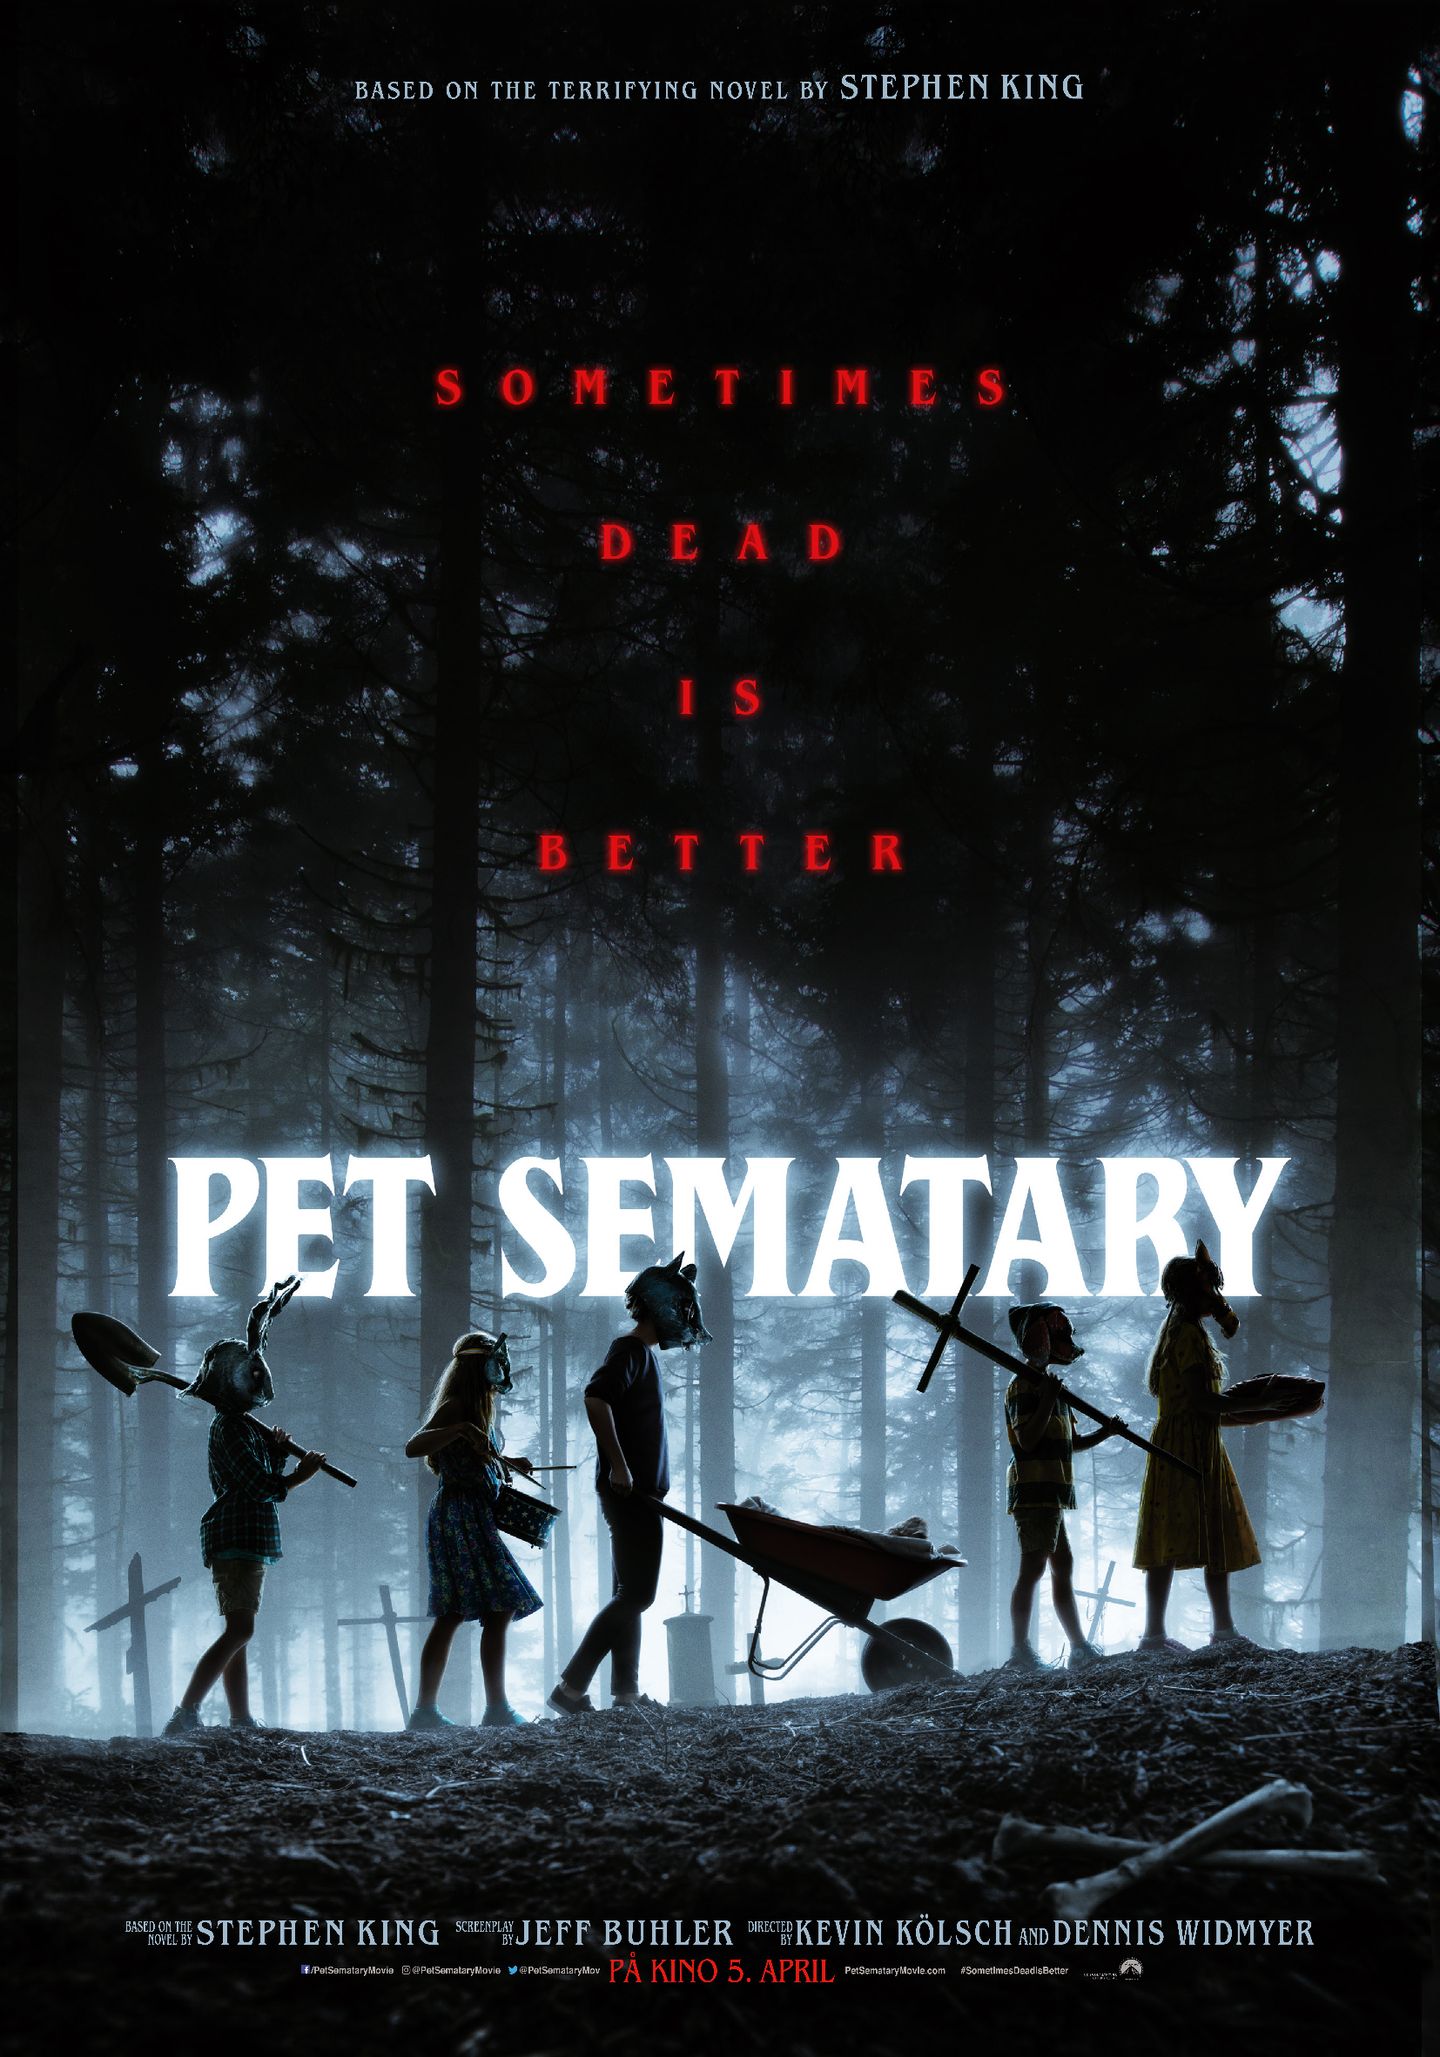 Plakat for 'Pet Sematary'